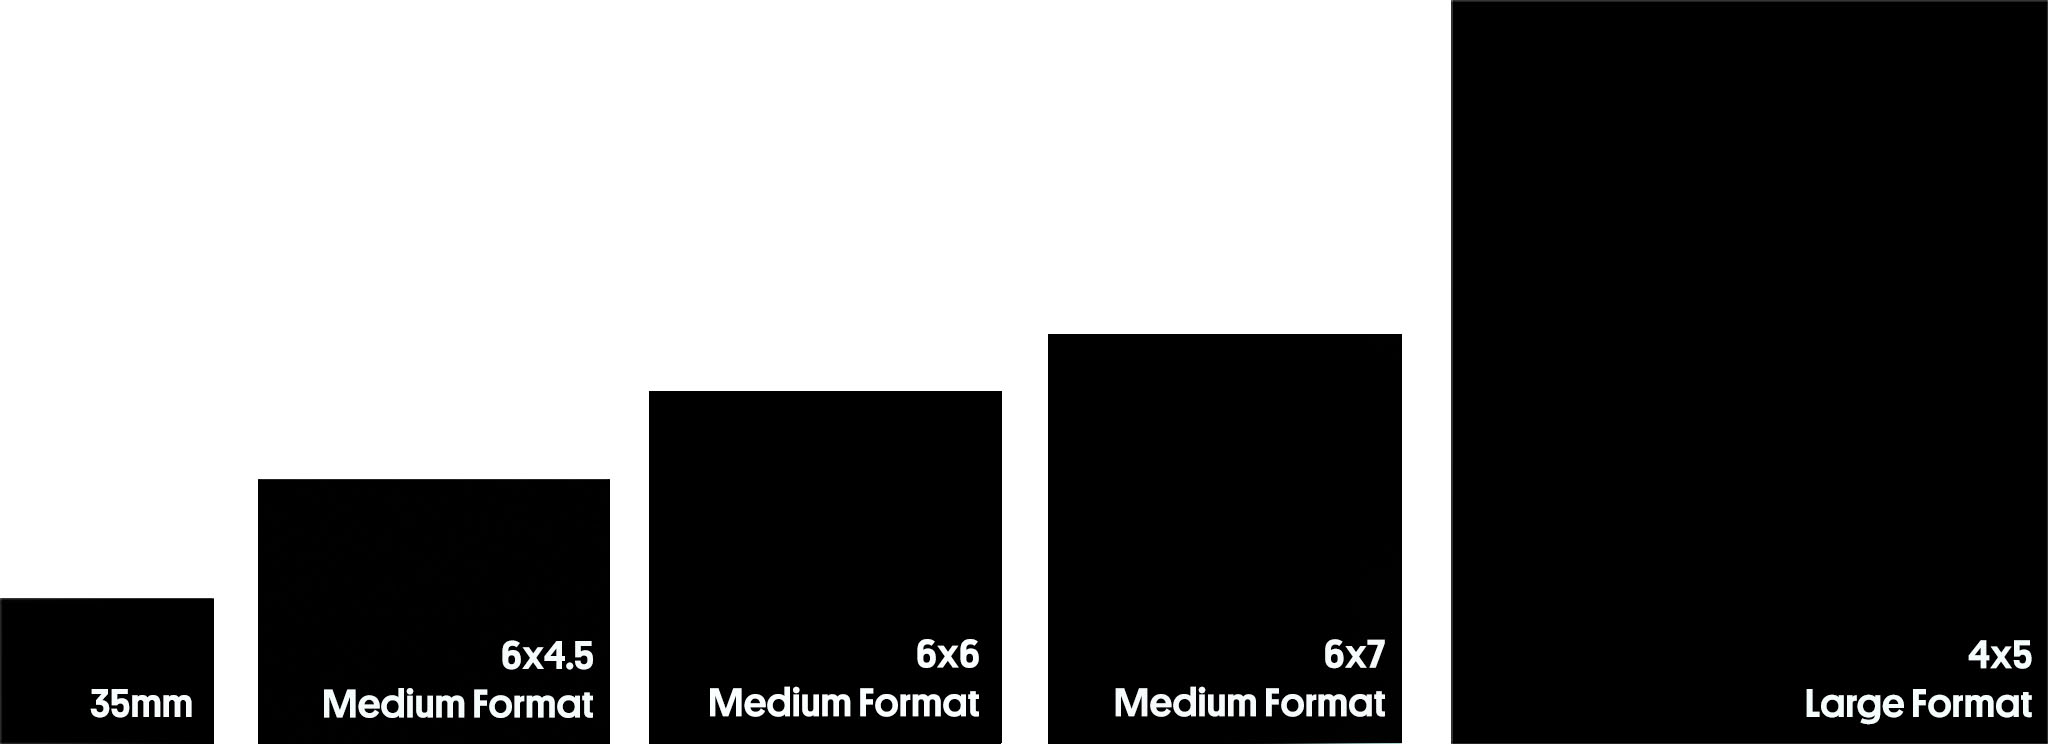 Explaining the Medium Format Look